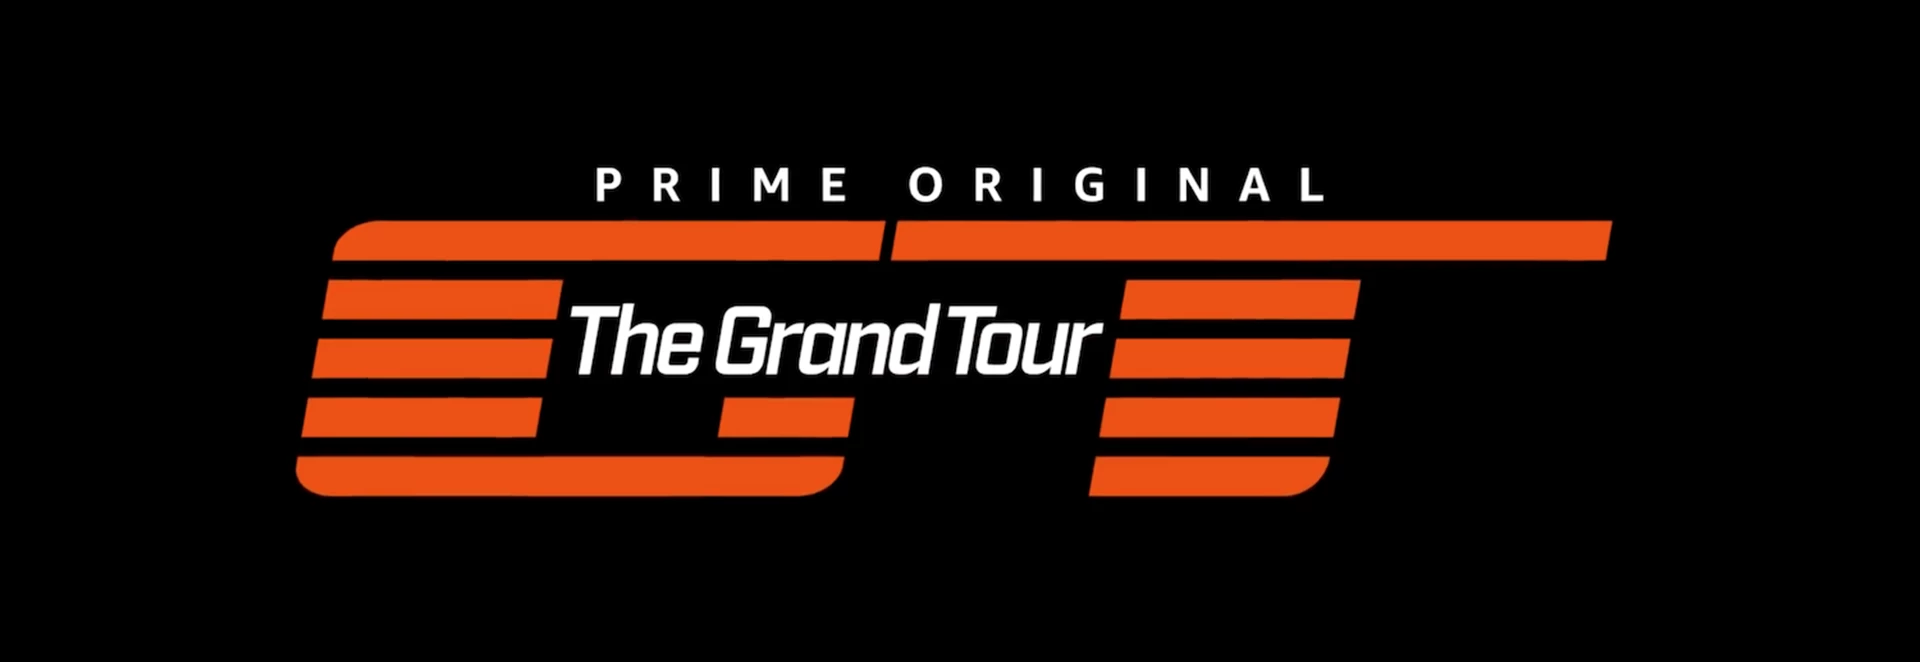 The Grand Tour Season 3: What to expect